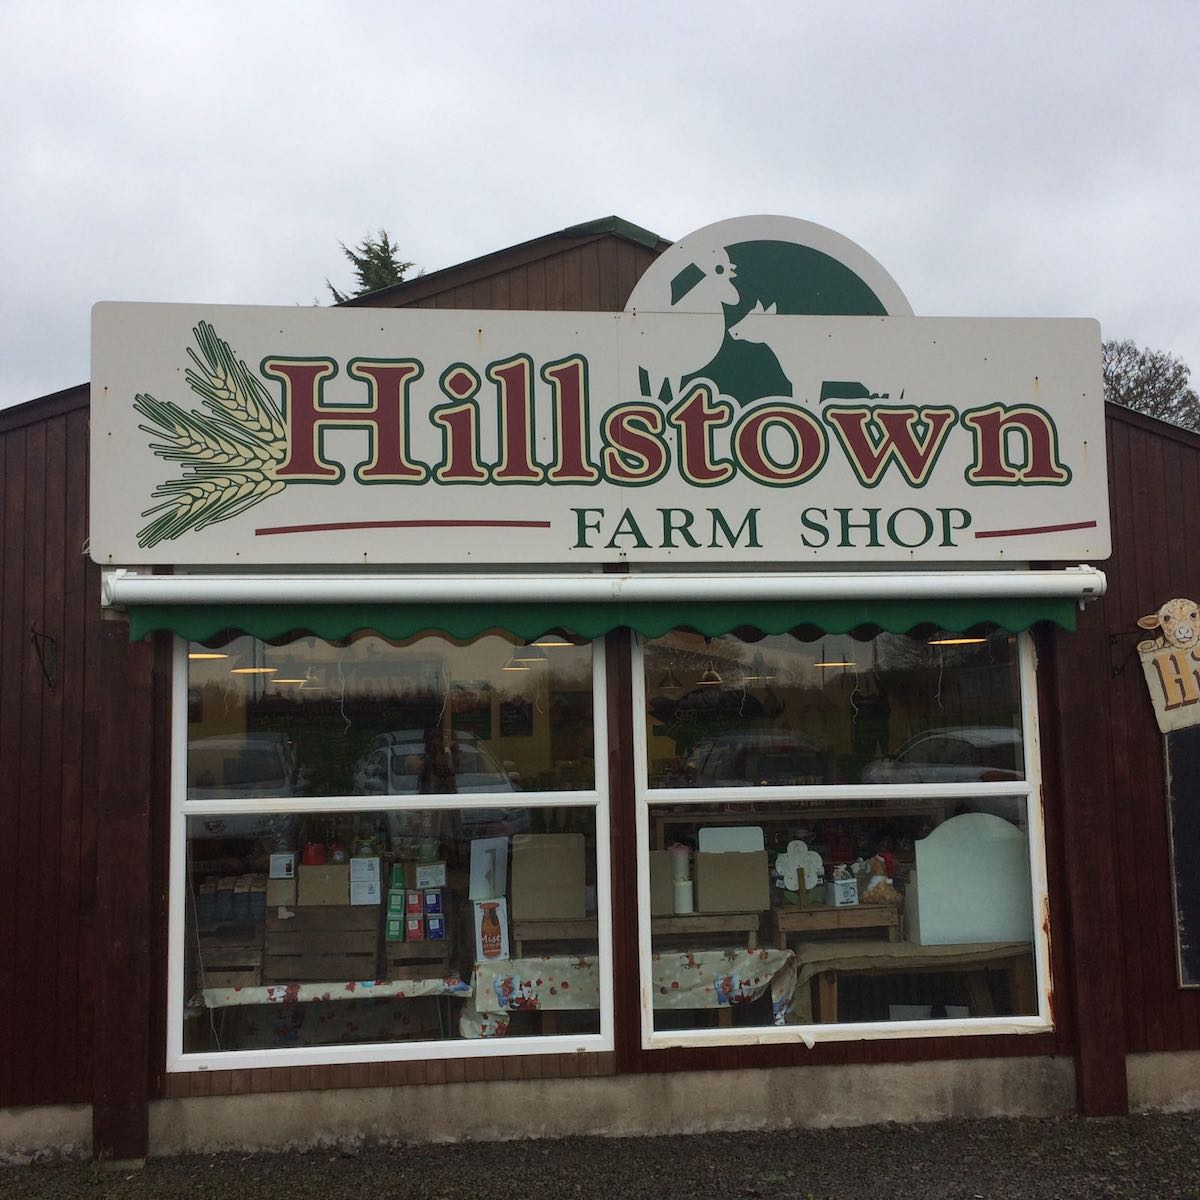 Christmas in Ballymena - Hillstown Farm Shop